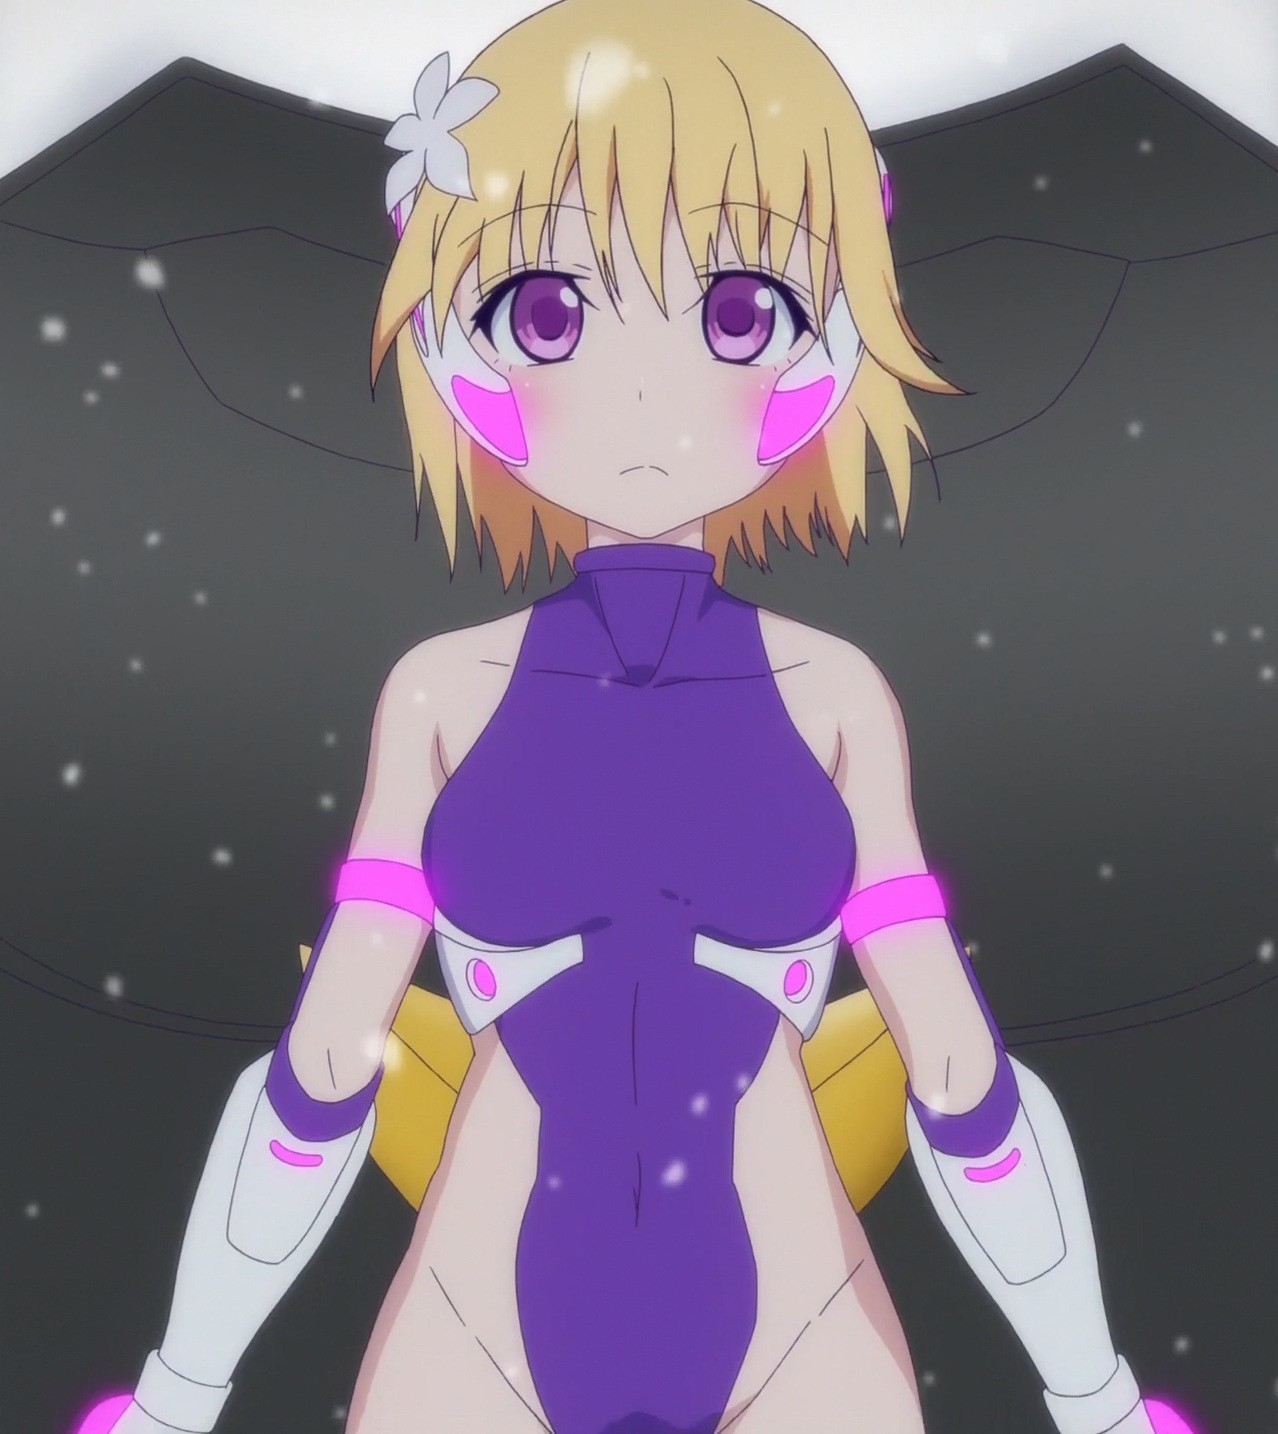 Masou Gakuen HxH anime OVA screencaps #4 